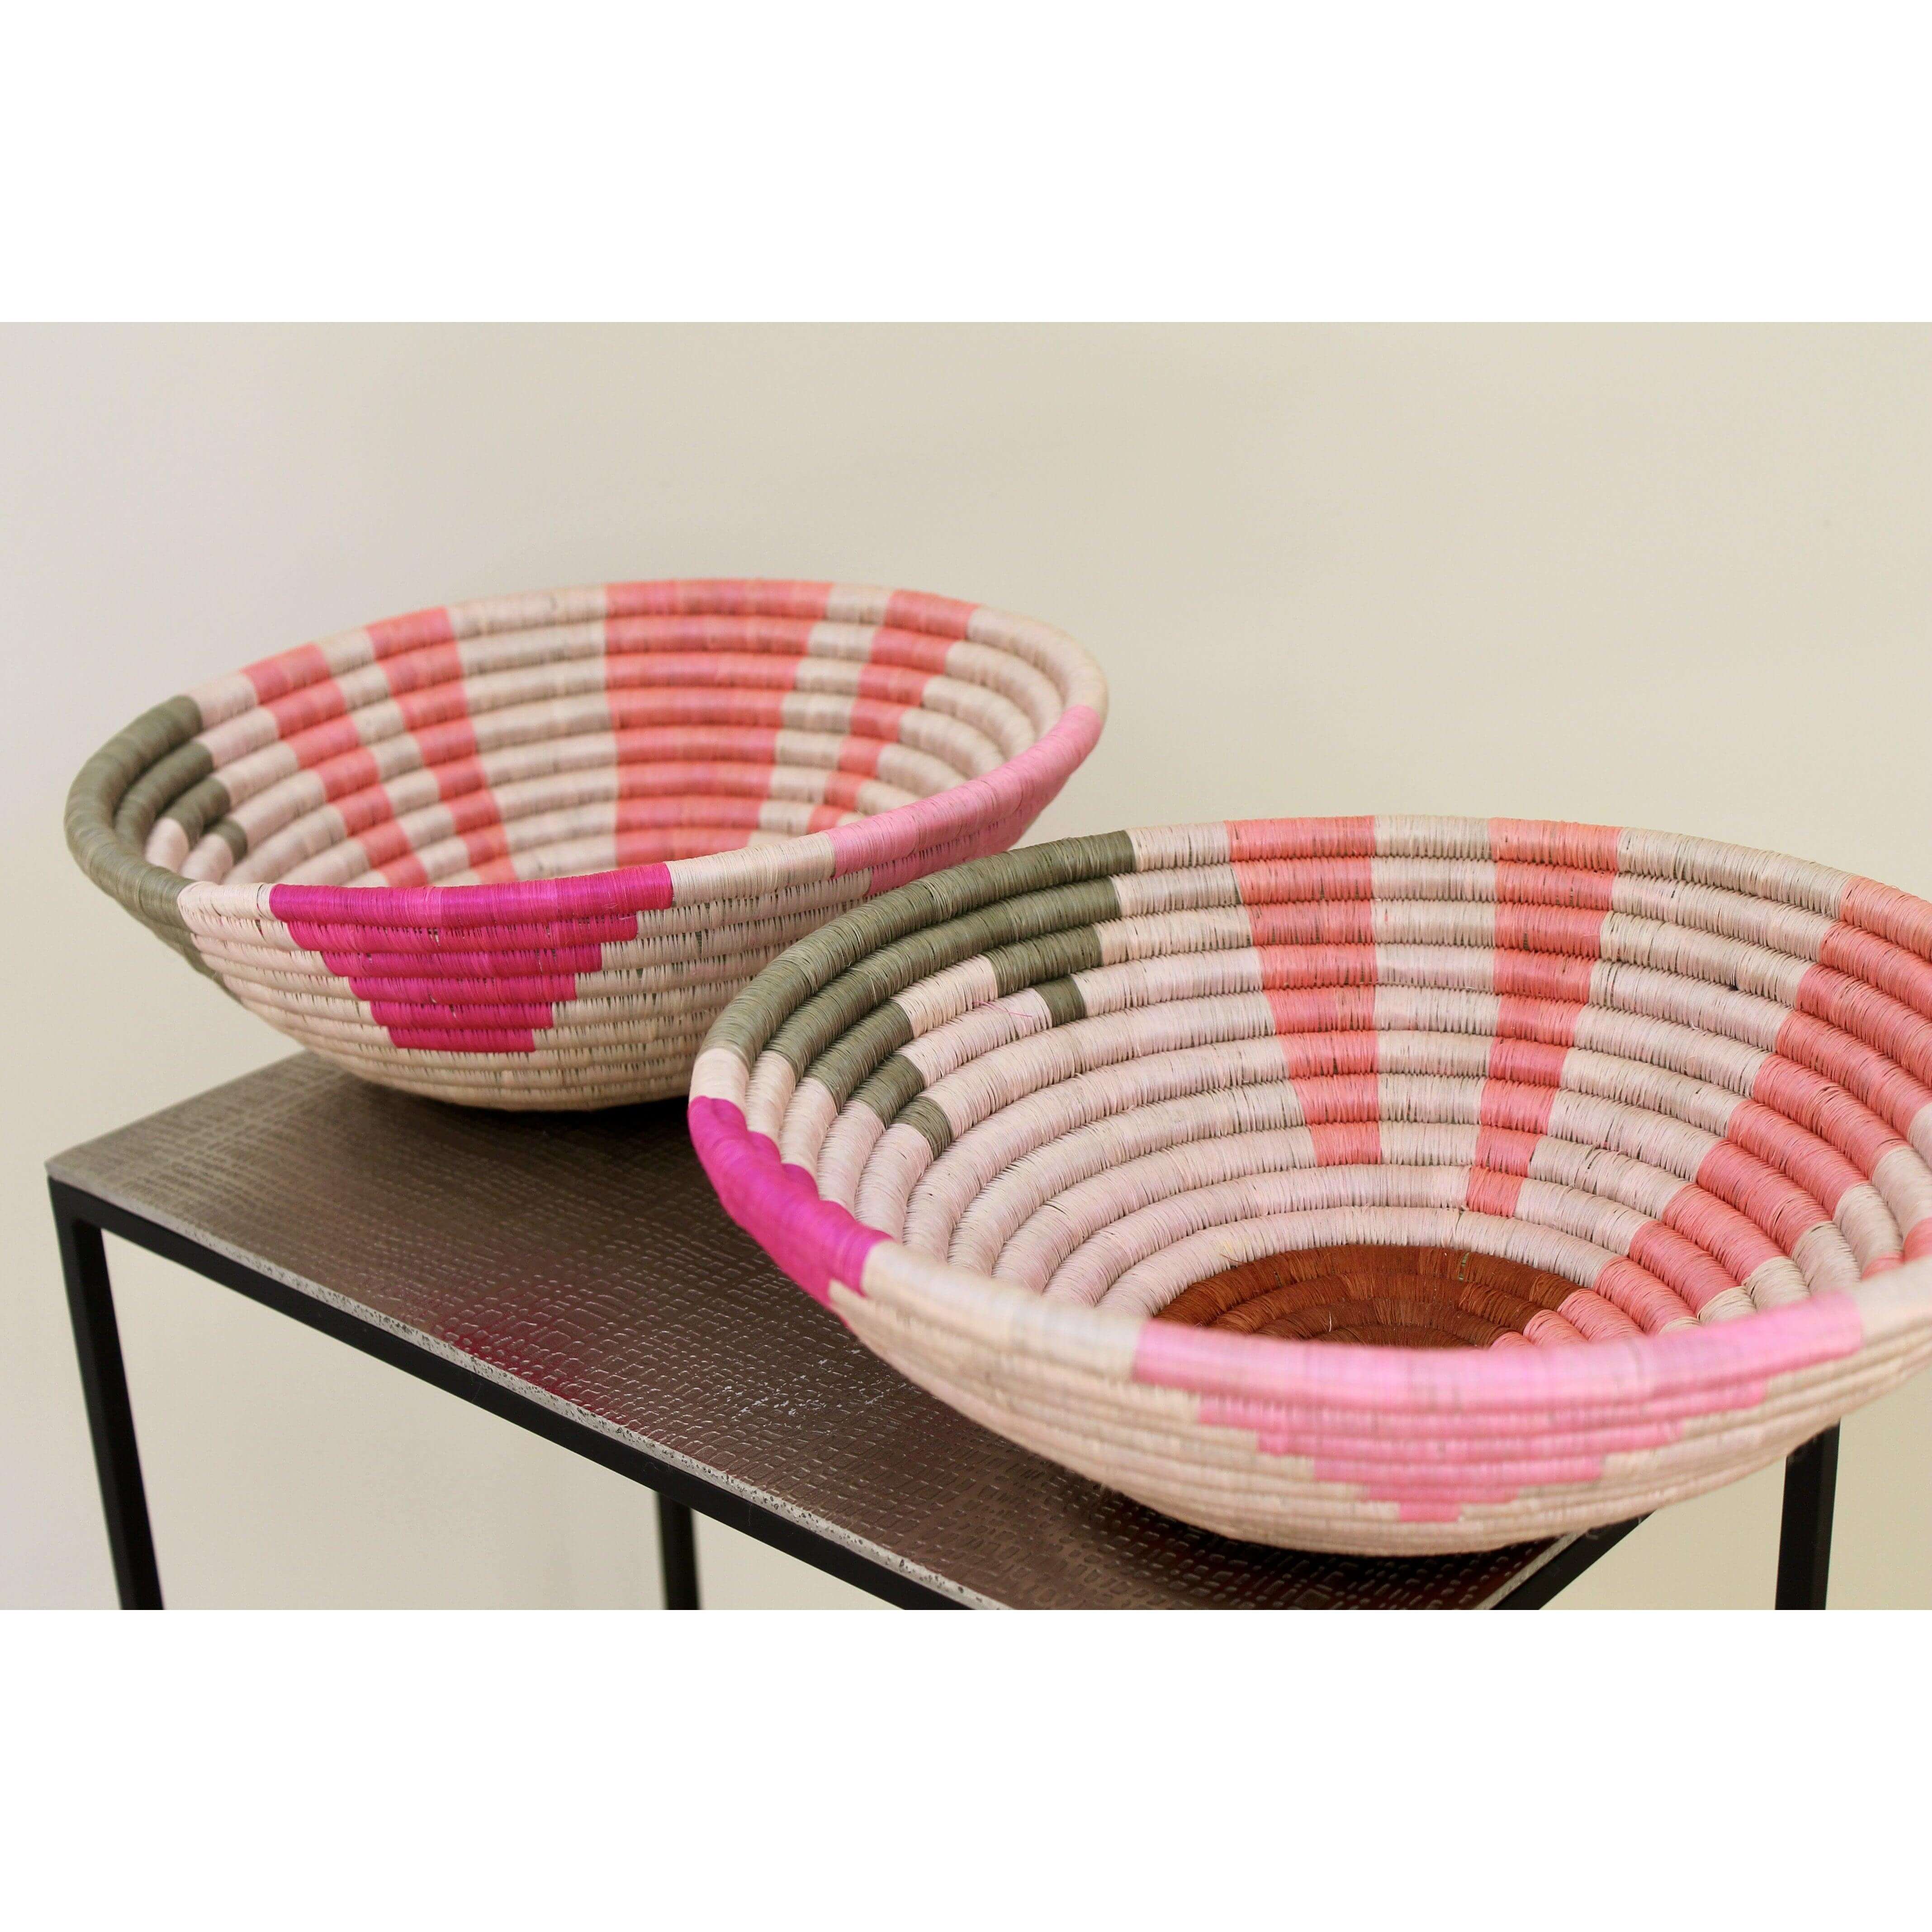 Artisan made African seagrass bowls